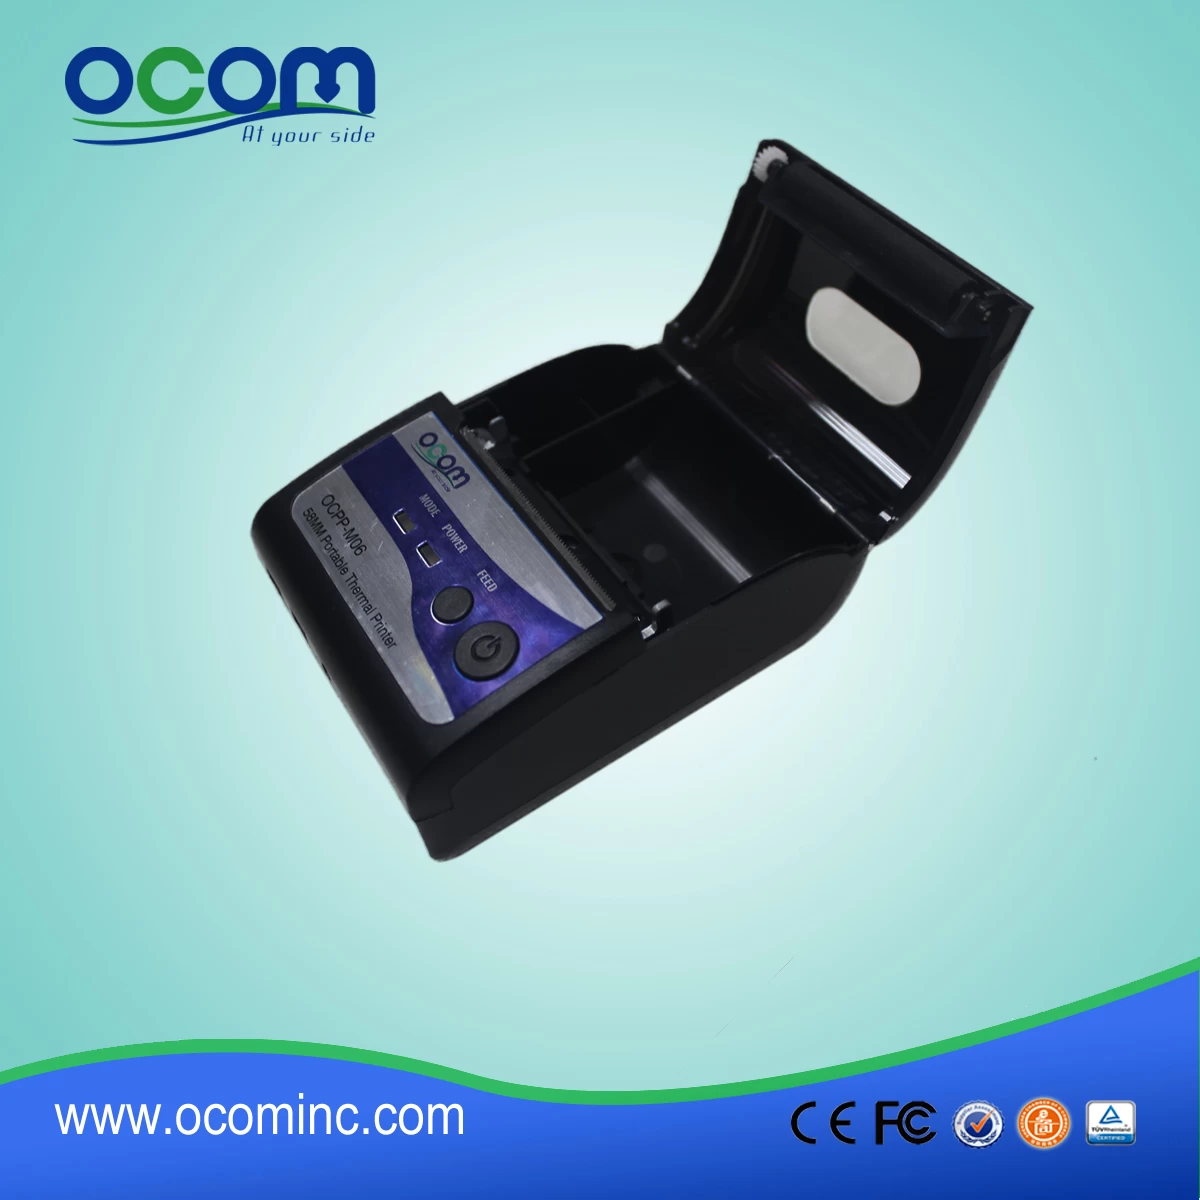 (OCPP-M06)China factory OCOM bluetooth handheld printer, mini handheld printer